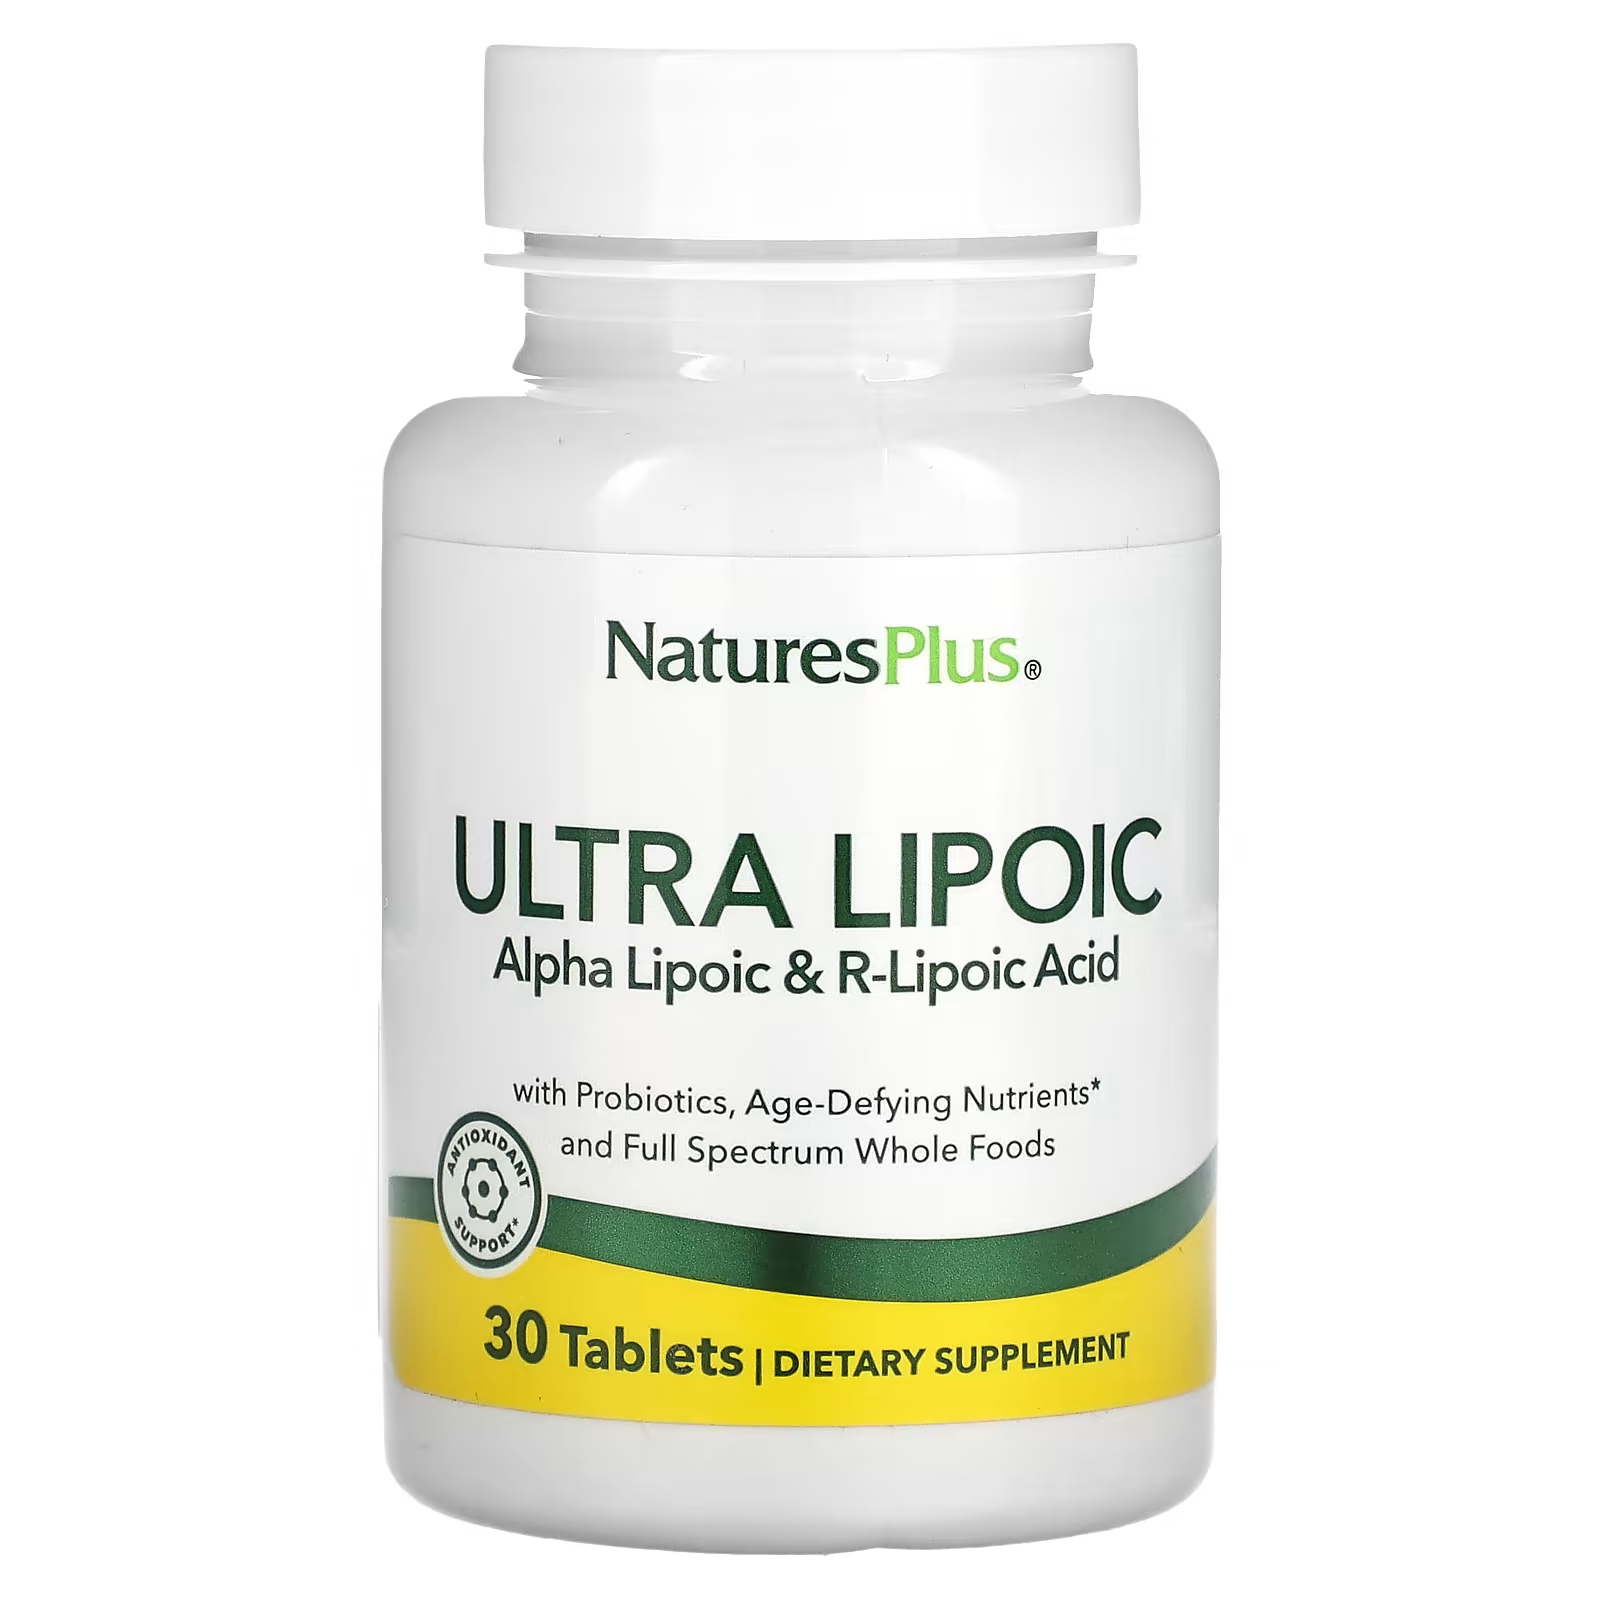 Пищевая добавка NaturesPlus Ultra Lipoic, 30 таблеток mason natural корица с альфа липоевой кислотой 60 капсул